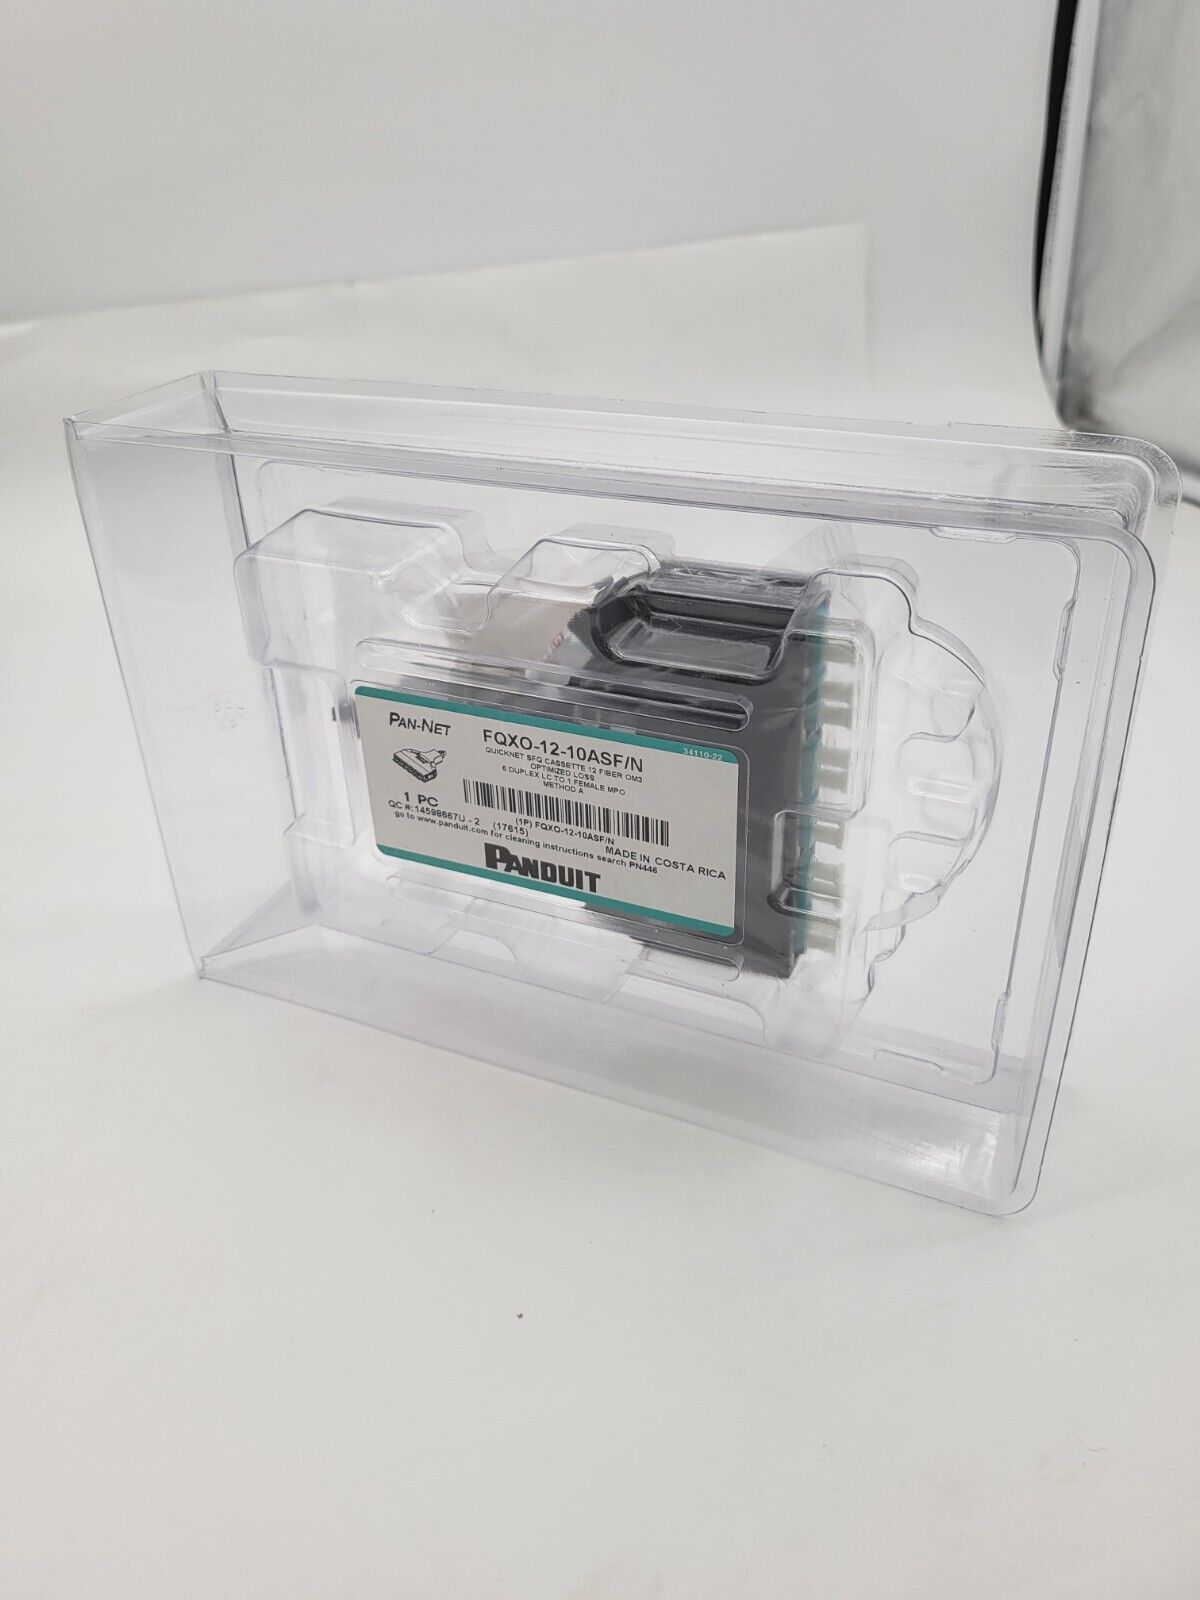 Panduit Pan-Net FQXO-12-10ASF/N Quicknet SFQ Cassette 12Fiber OM3 Optimized Loss